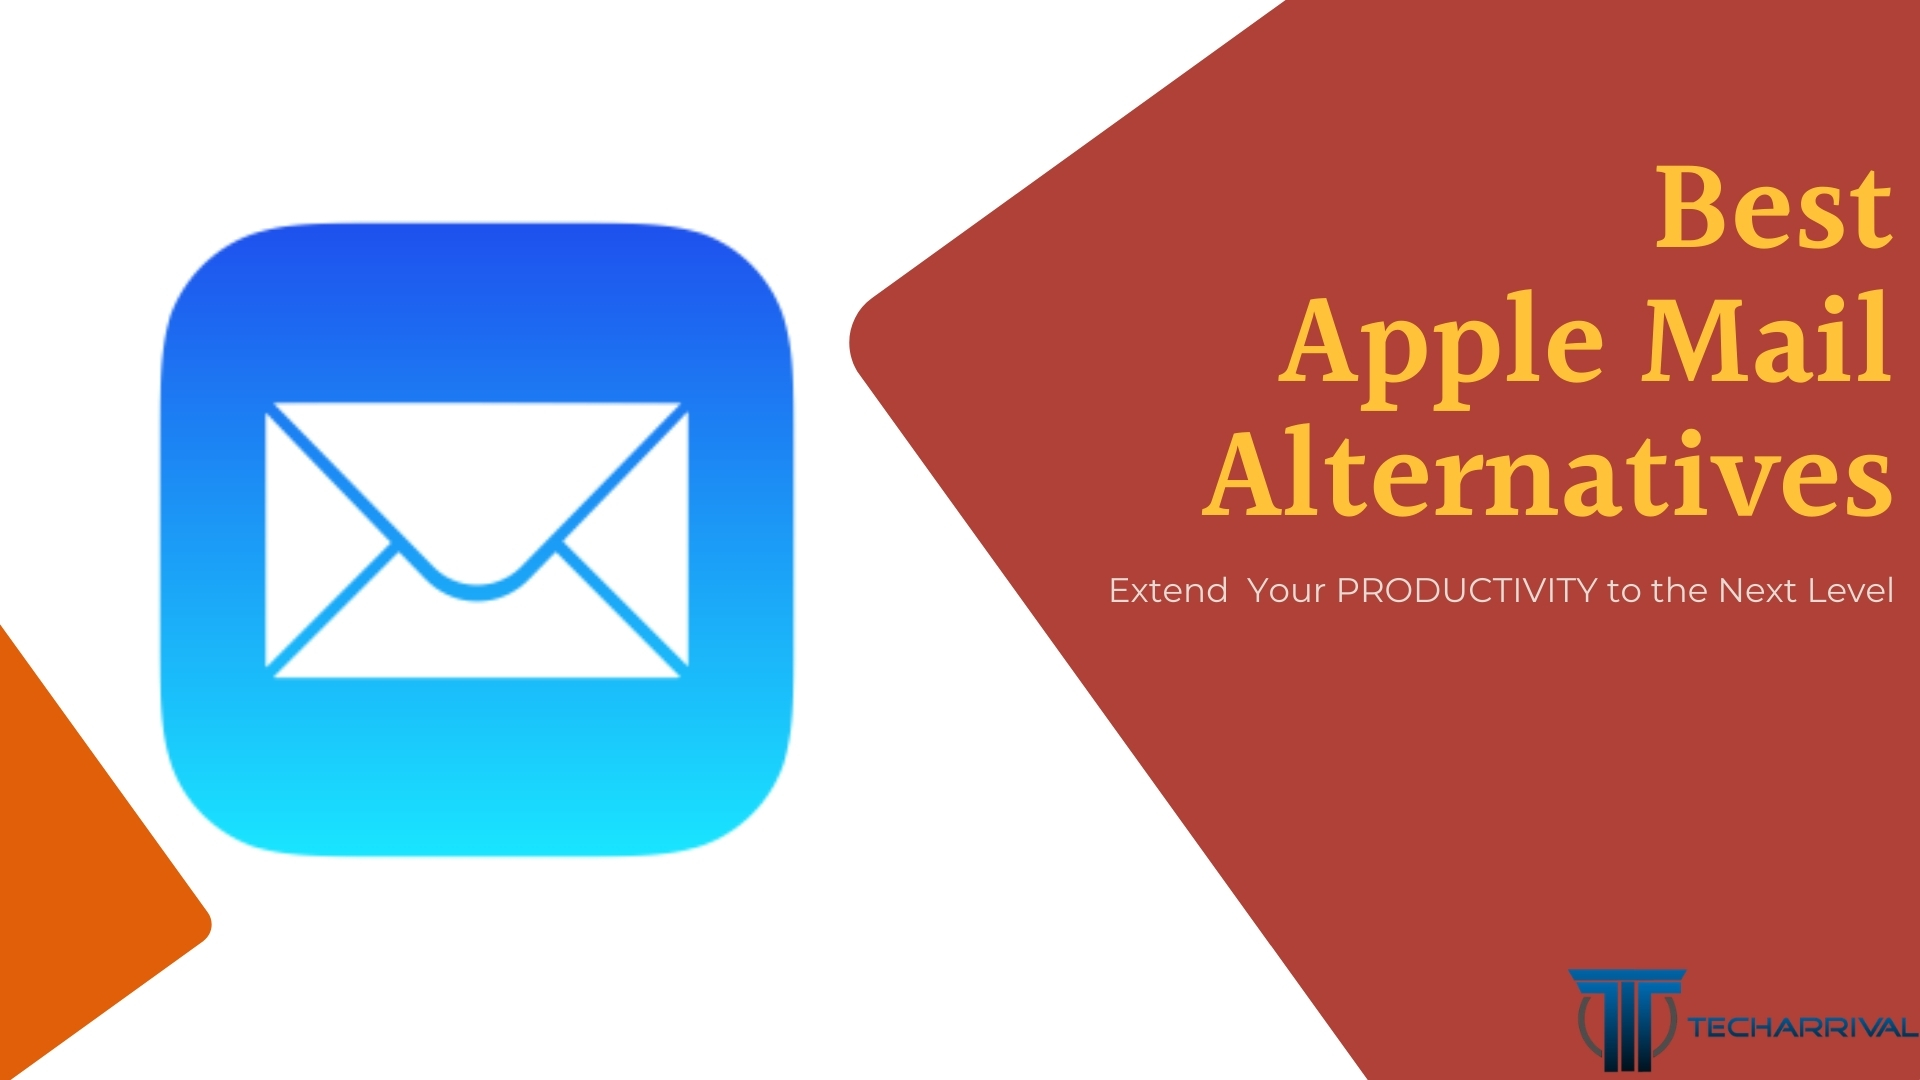 mailbutler alternative apple mail